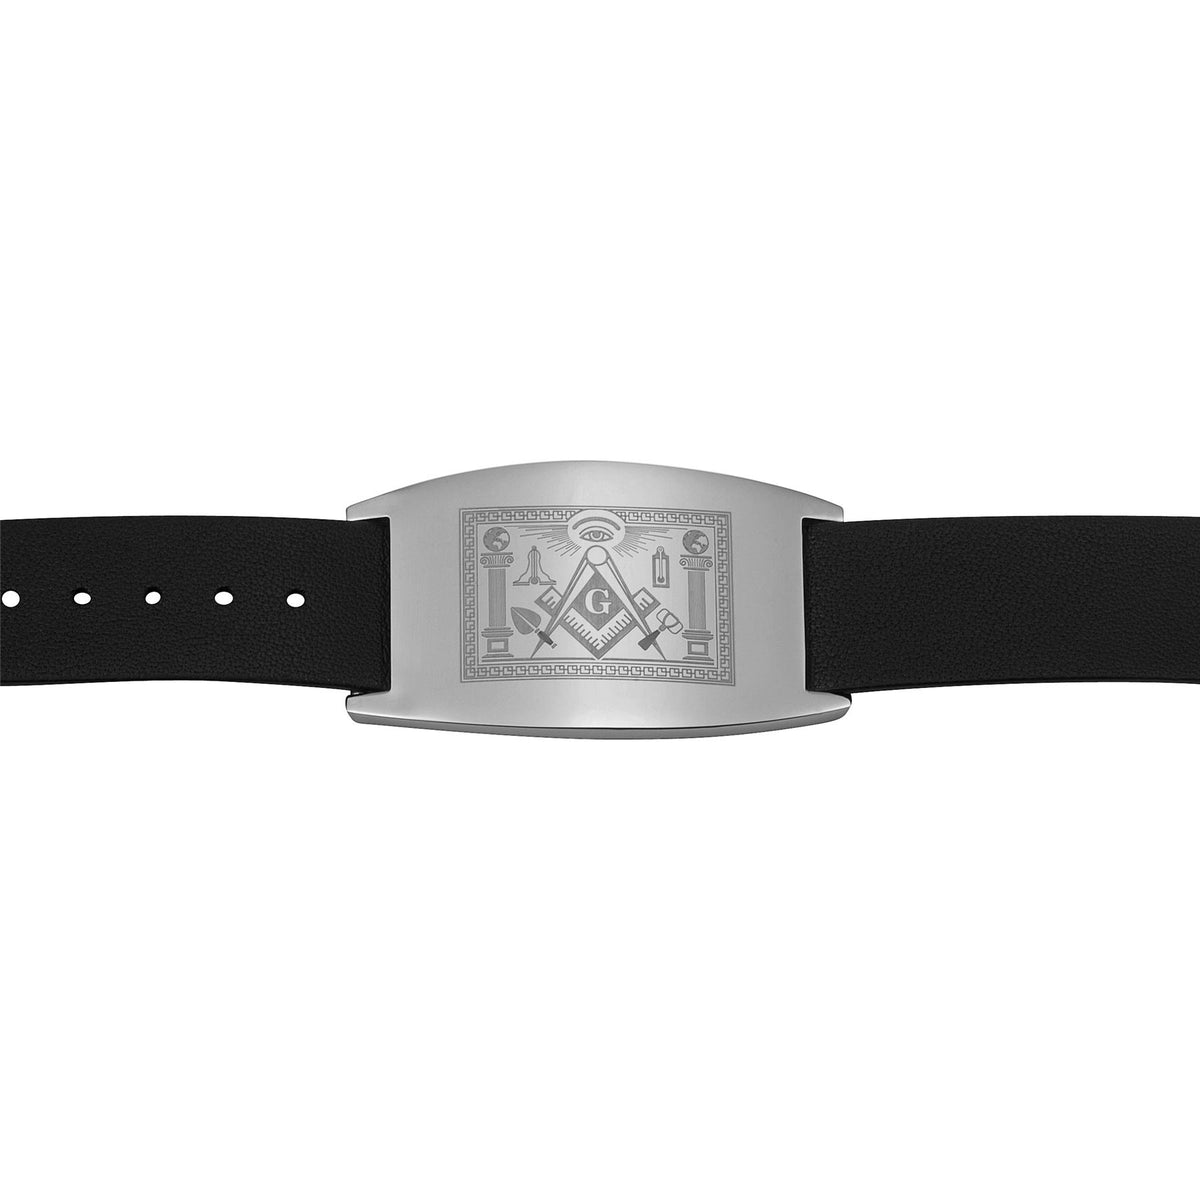 MasonicMan Leather Freemasonry Masonic Bracelet with Working Tools Design in Gift Box …